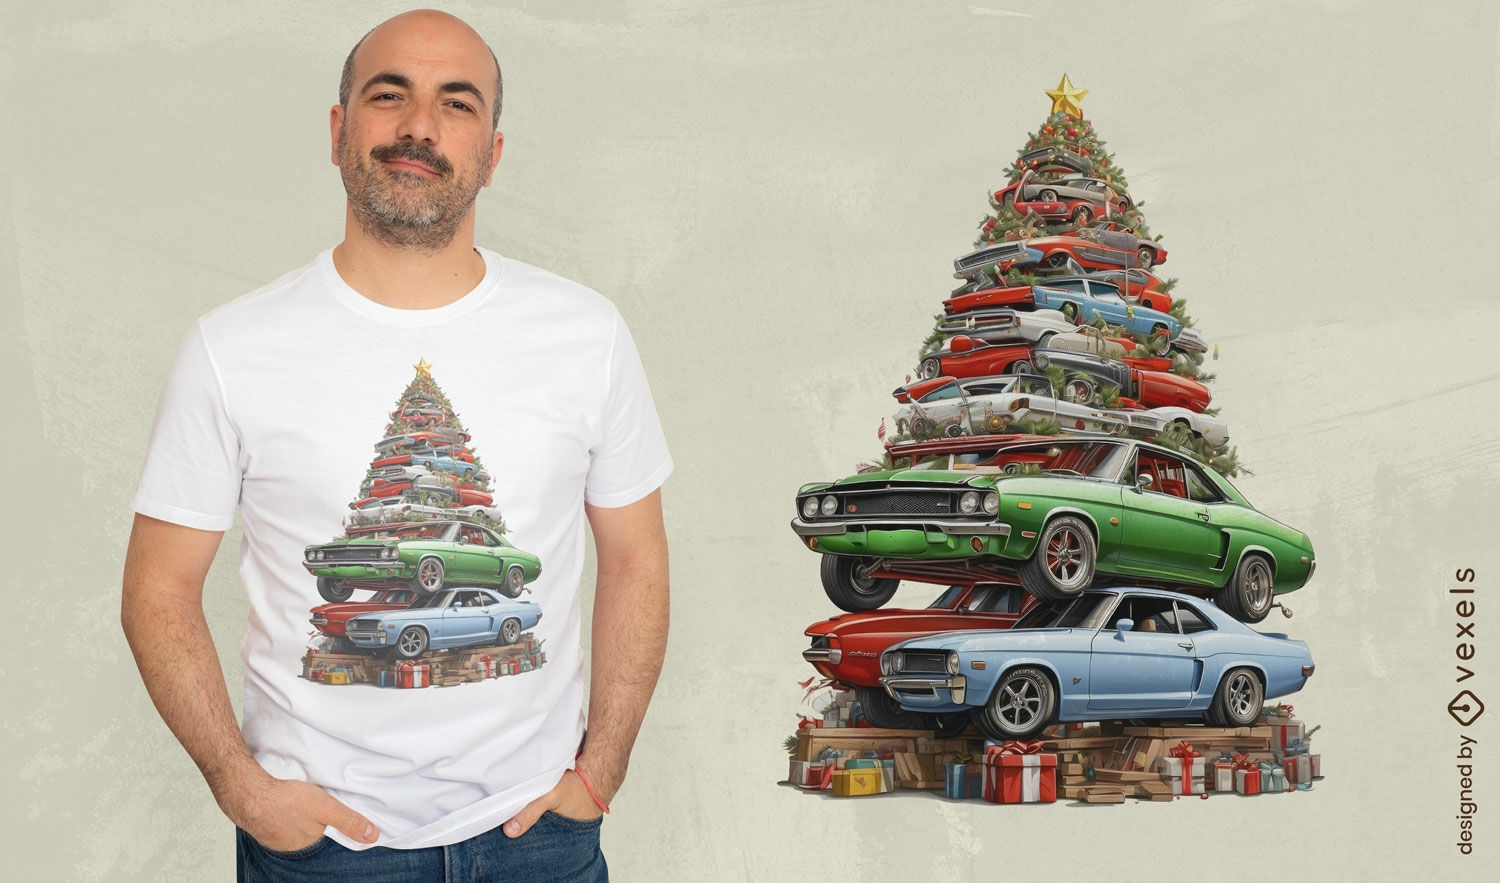 Car stack Christmas tree t-shirt design